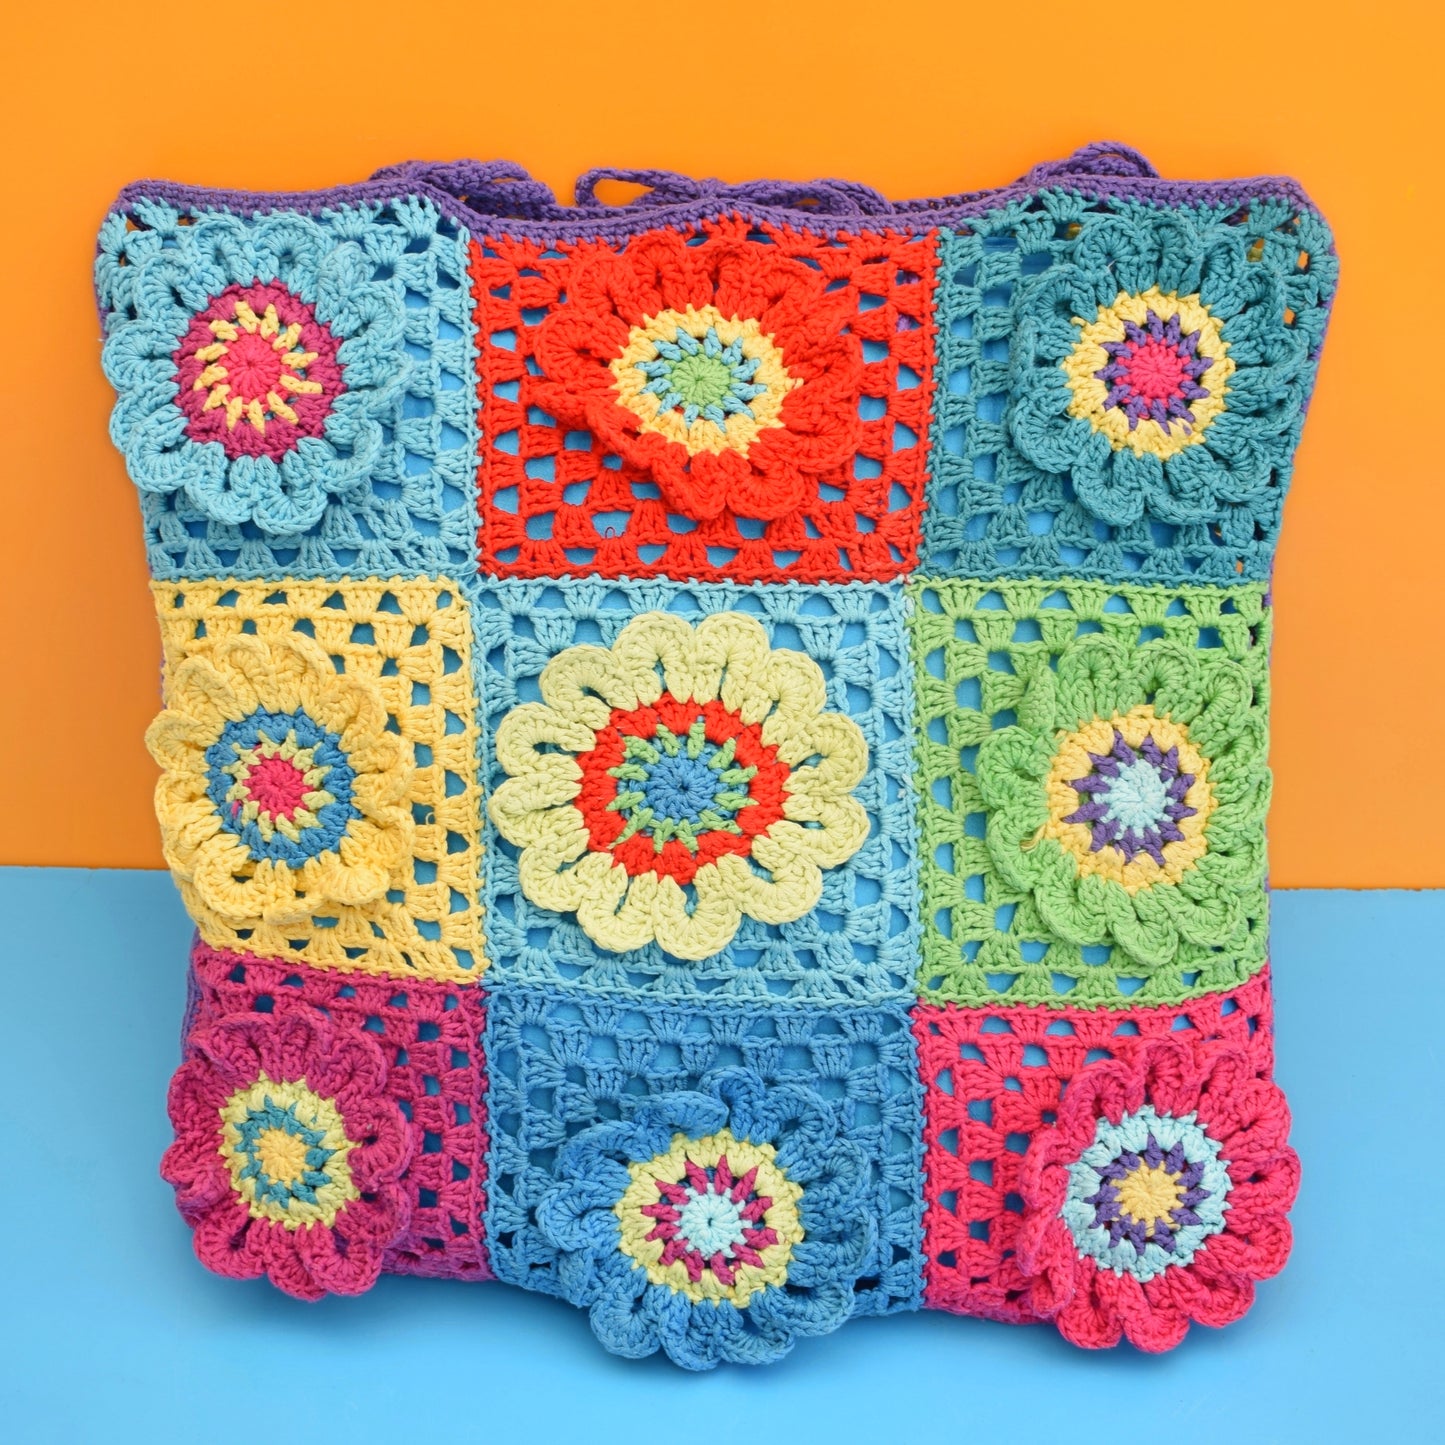 Vintage 1970s Crochet Cushion - Flower Power